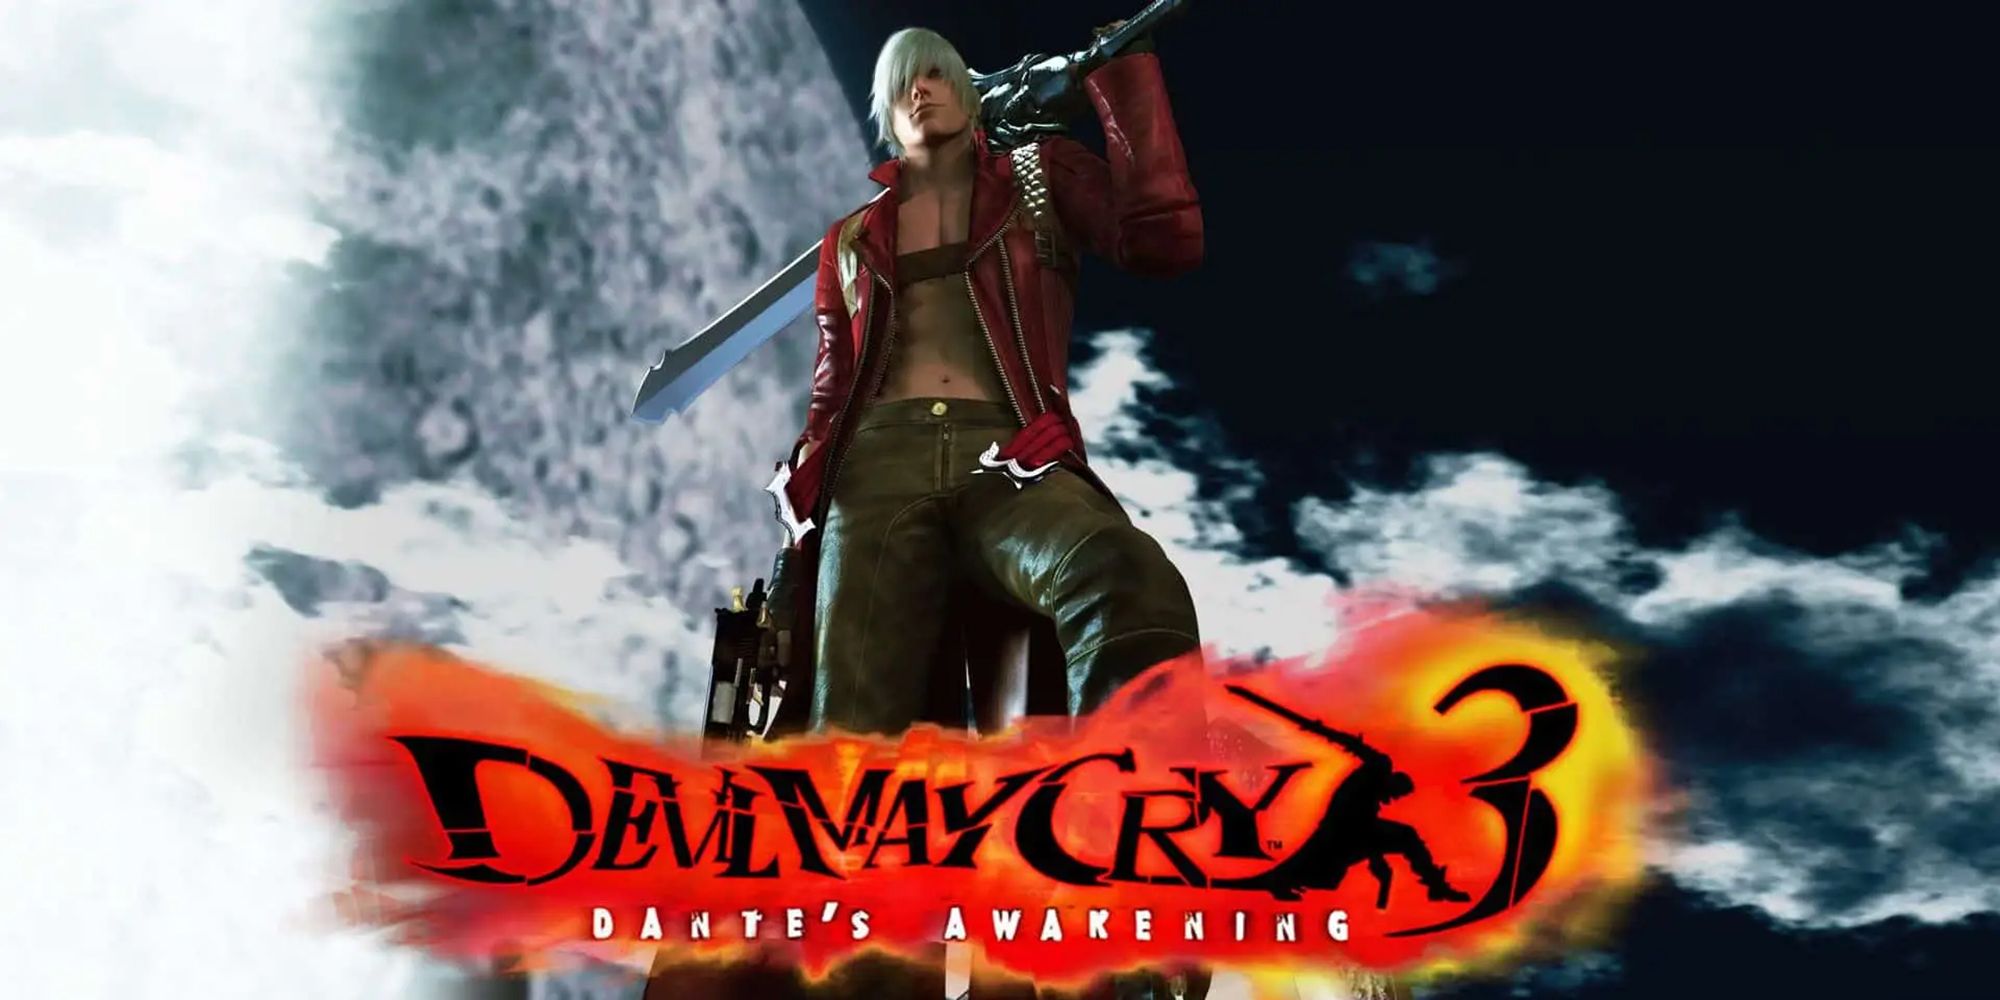 Dante Devil May Cry 3 (2005)